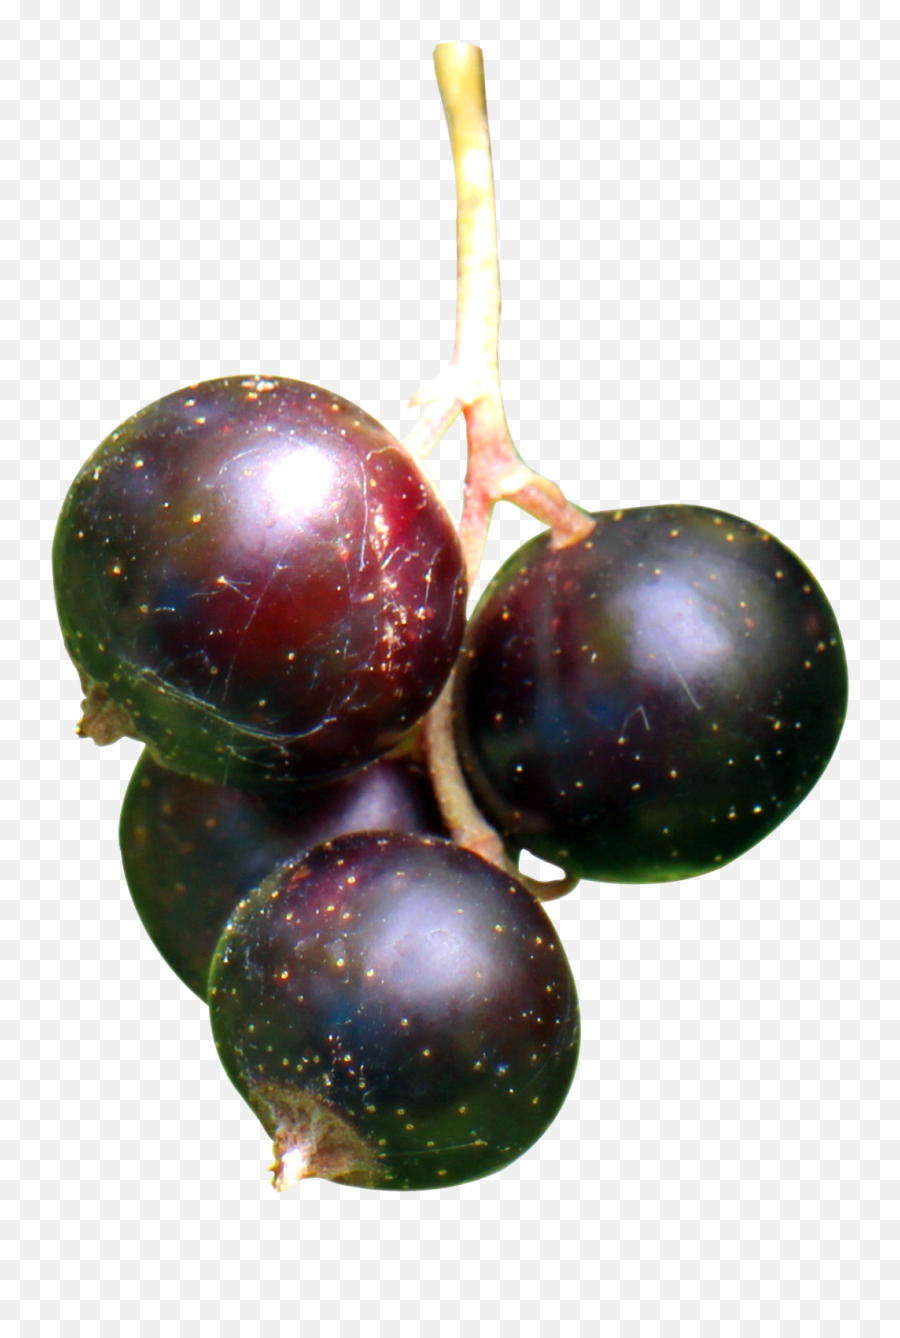 Black Currant Berries Png Image - Pngpix Blackcurrant Plant Png,Berries Png